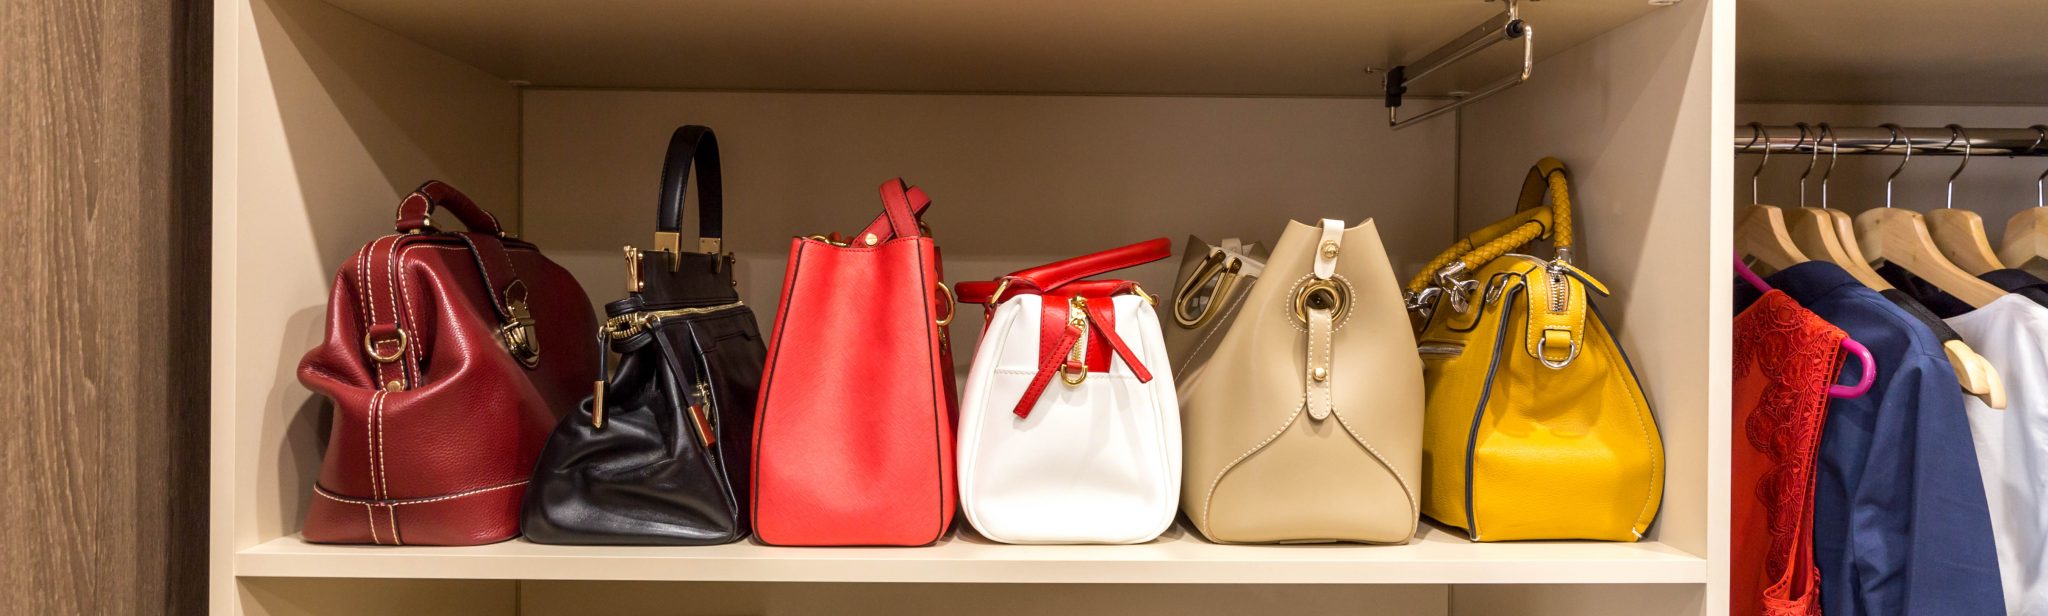 collection of handbags in woman`s wardrobe